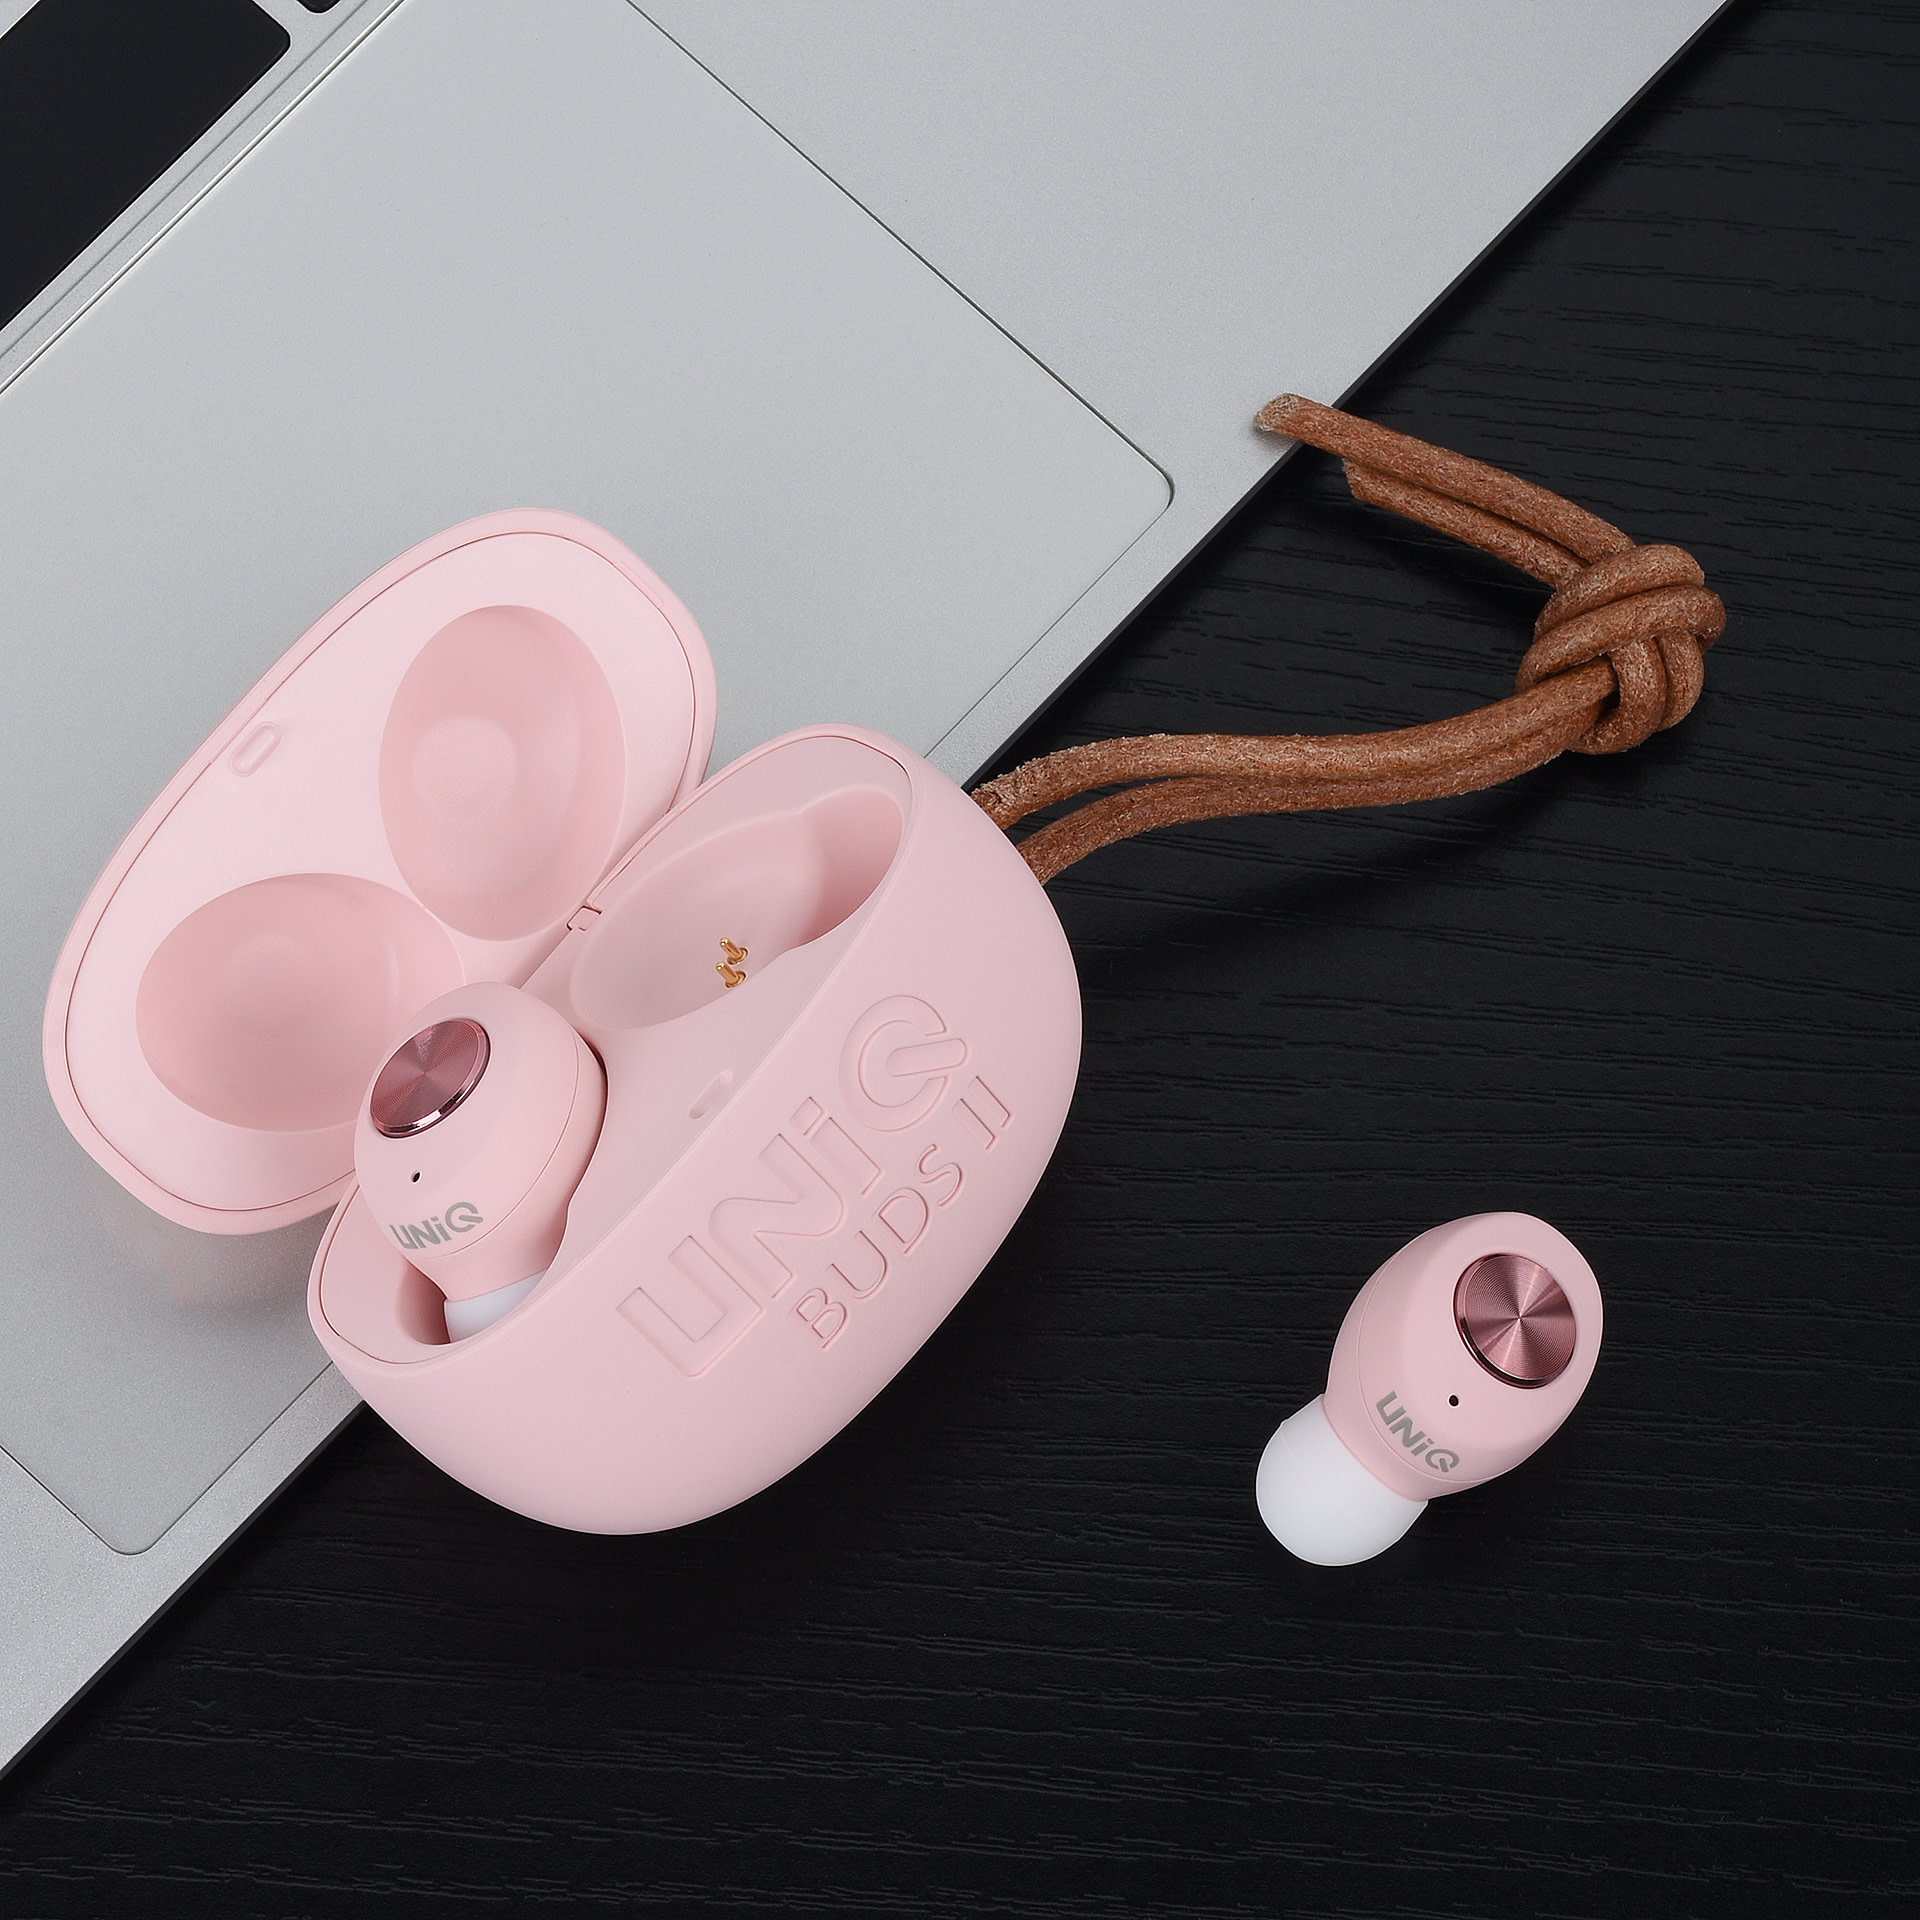 UNIQ Buds ll wireless earphones töltőtokkal - Pink